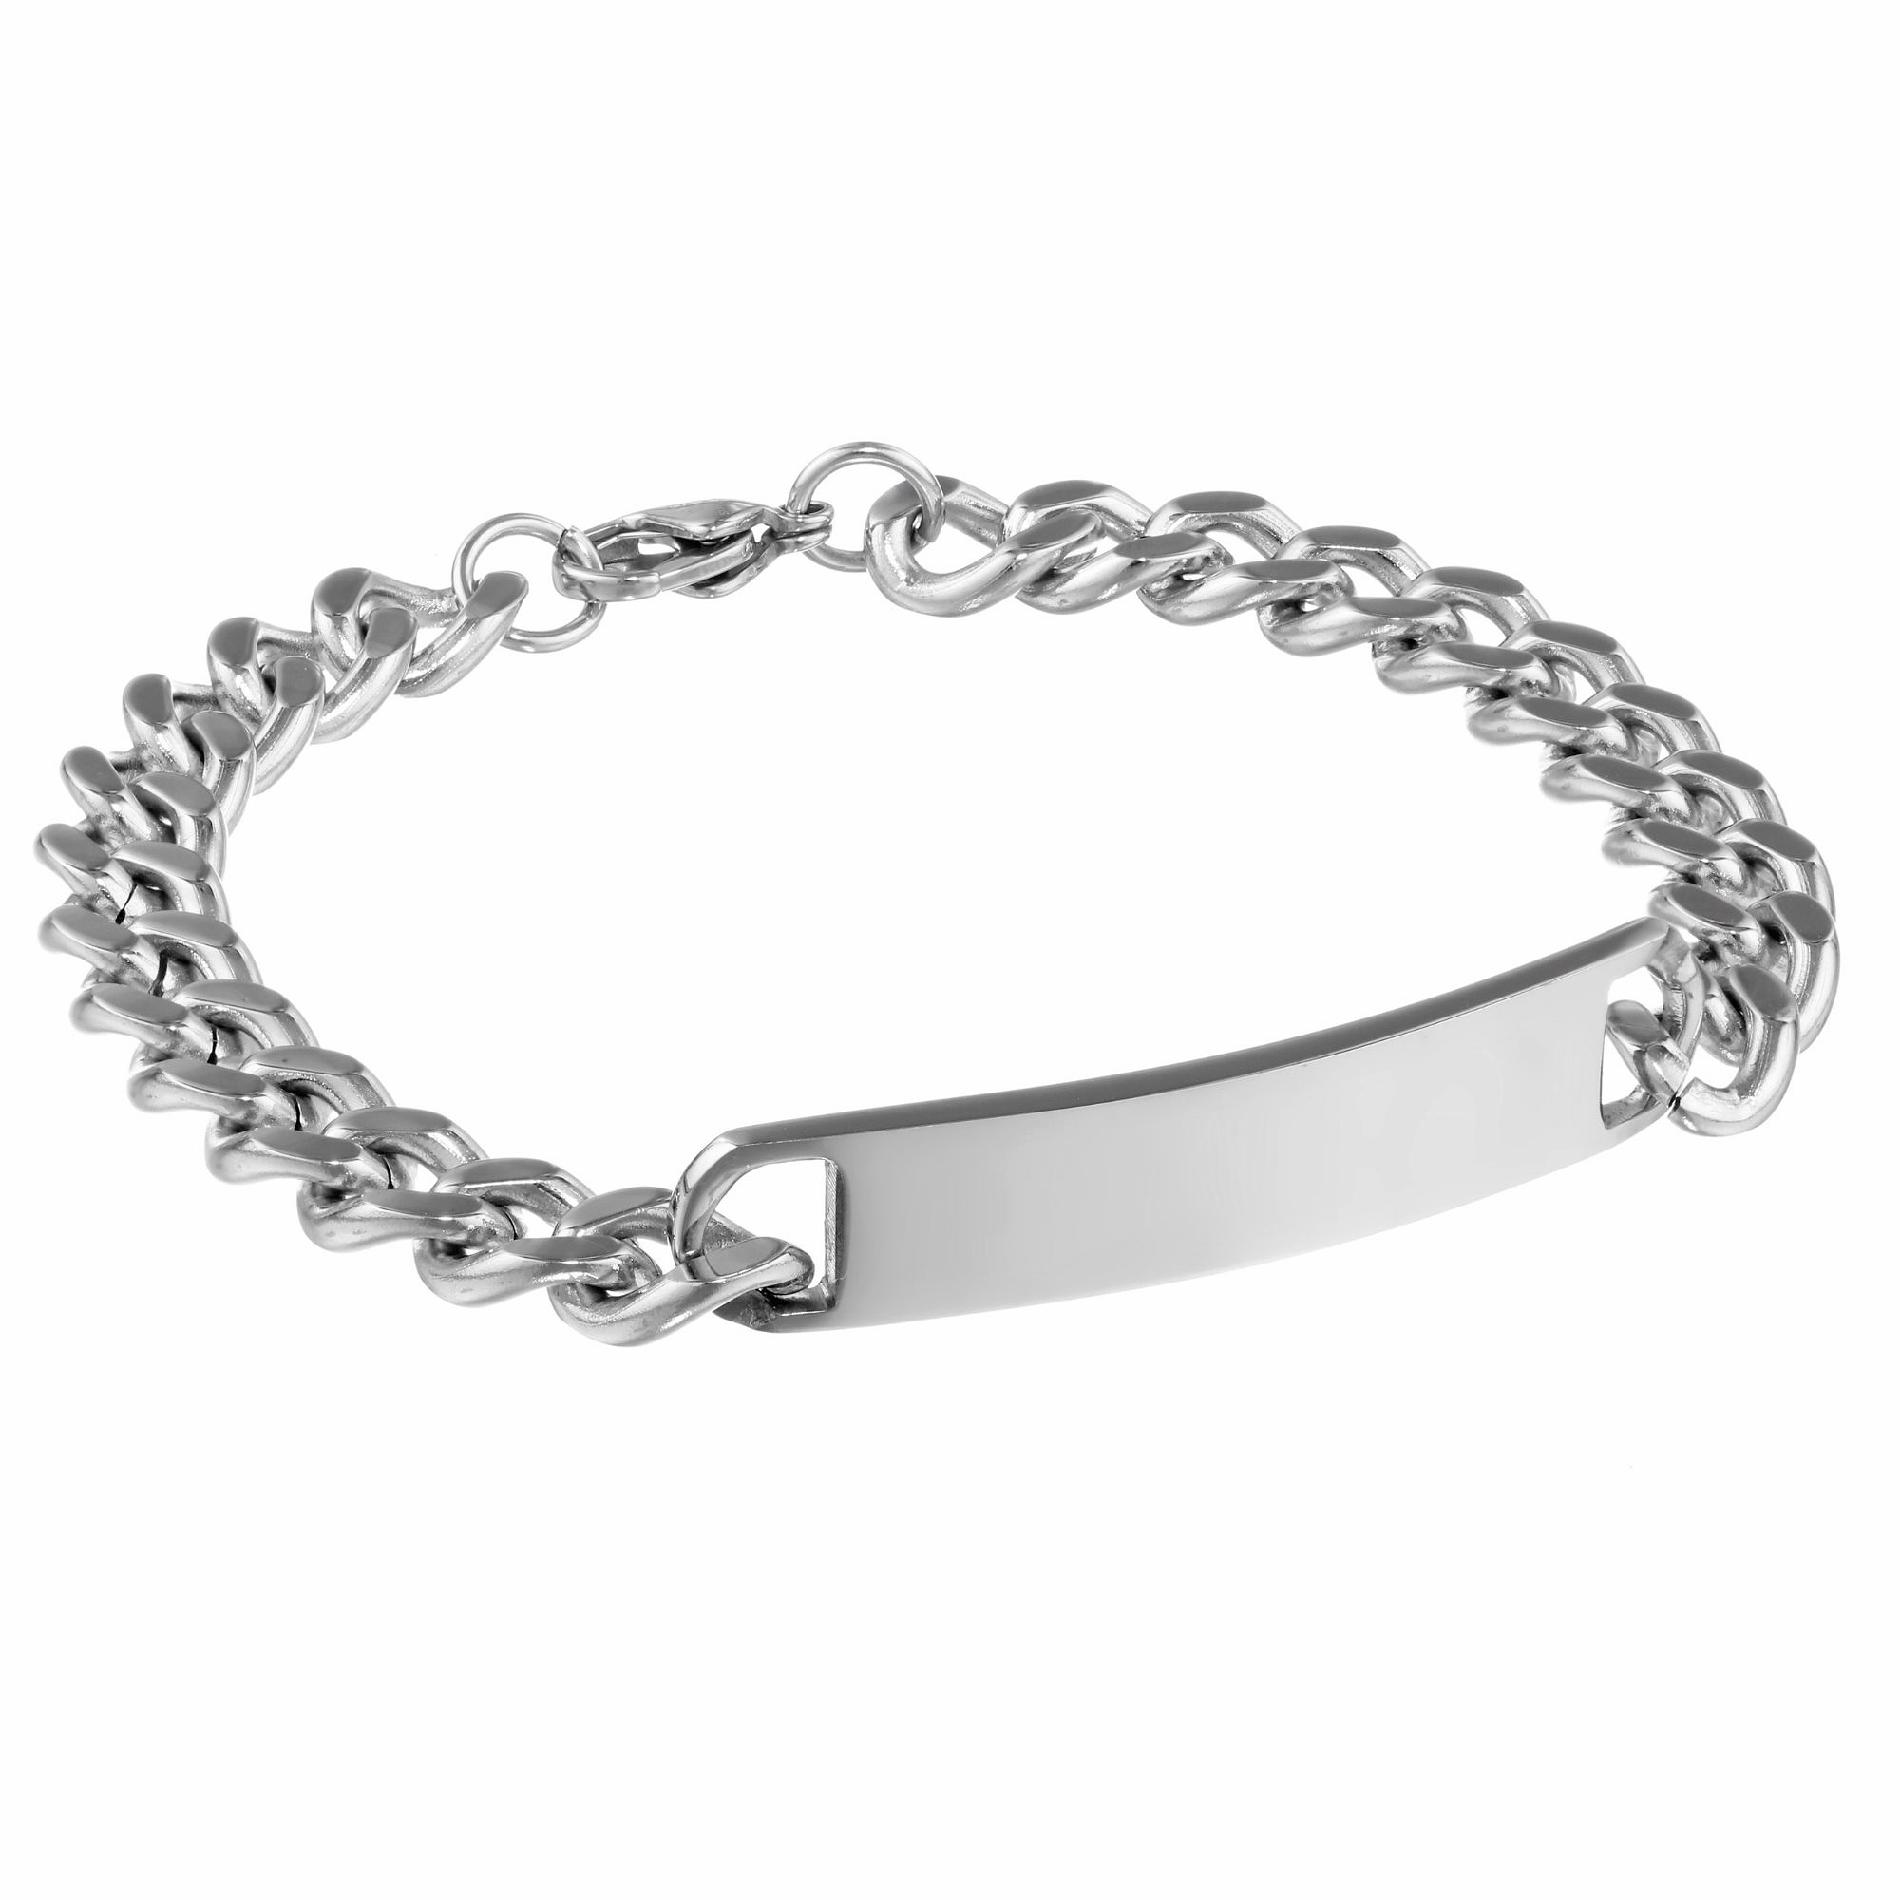 Curb Identification Bracelet in Stainless Steel